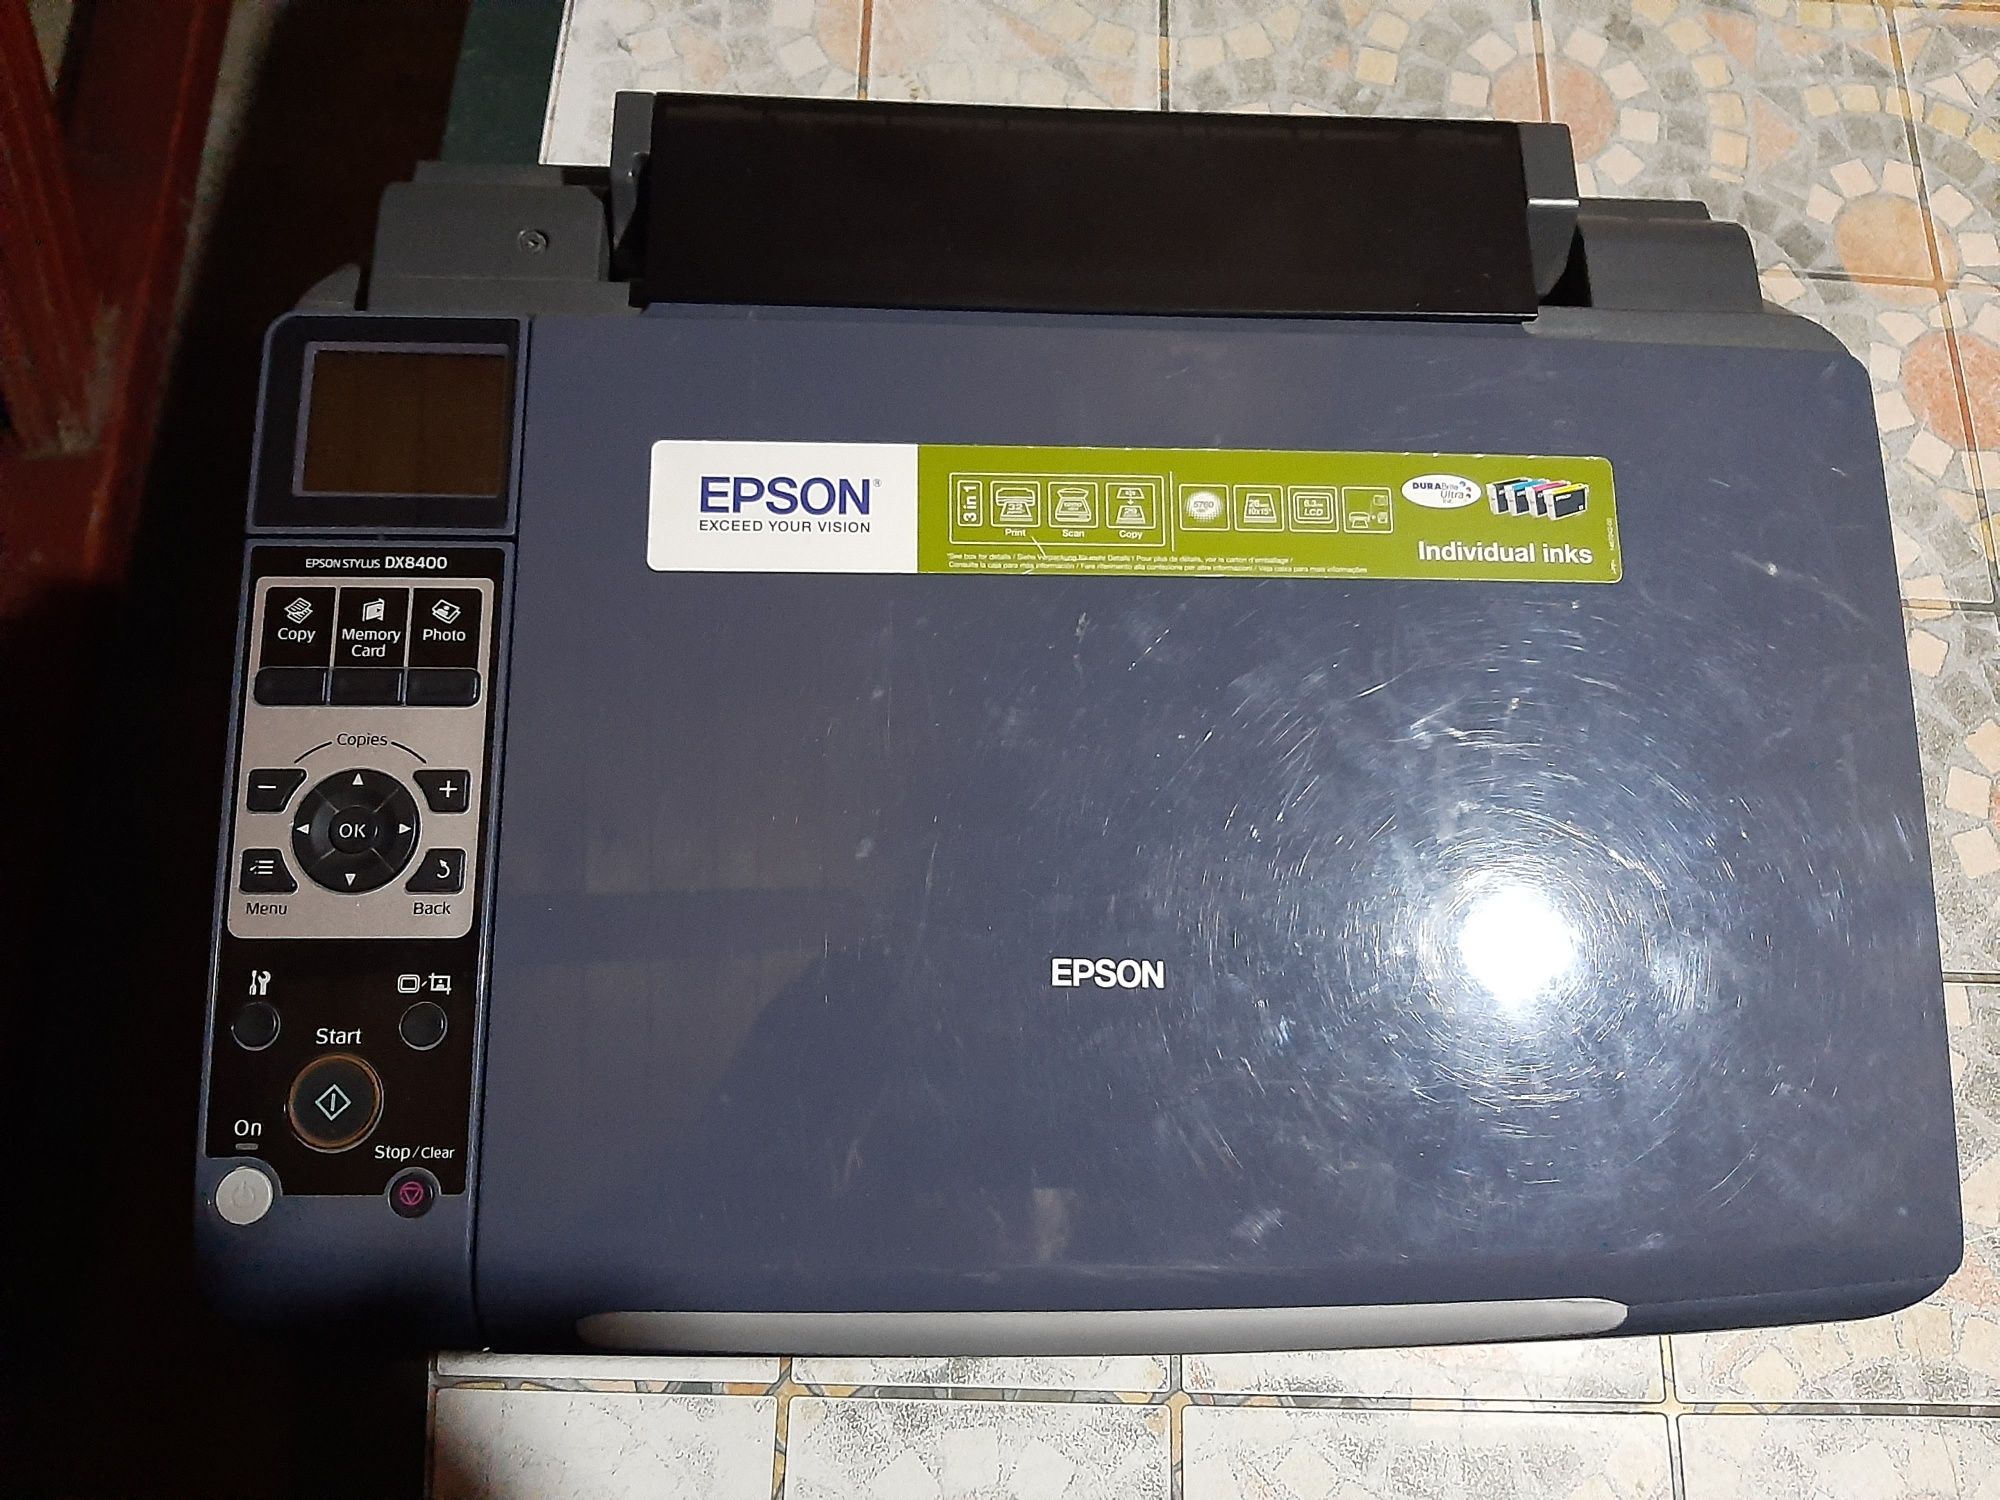 Imprimanta Epson